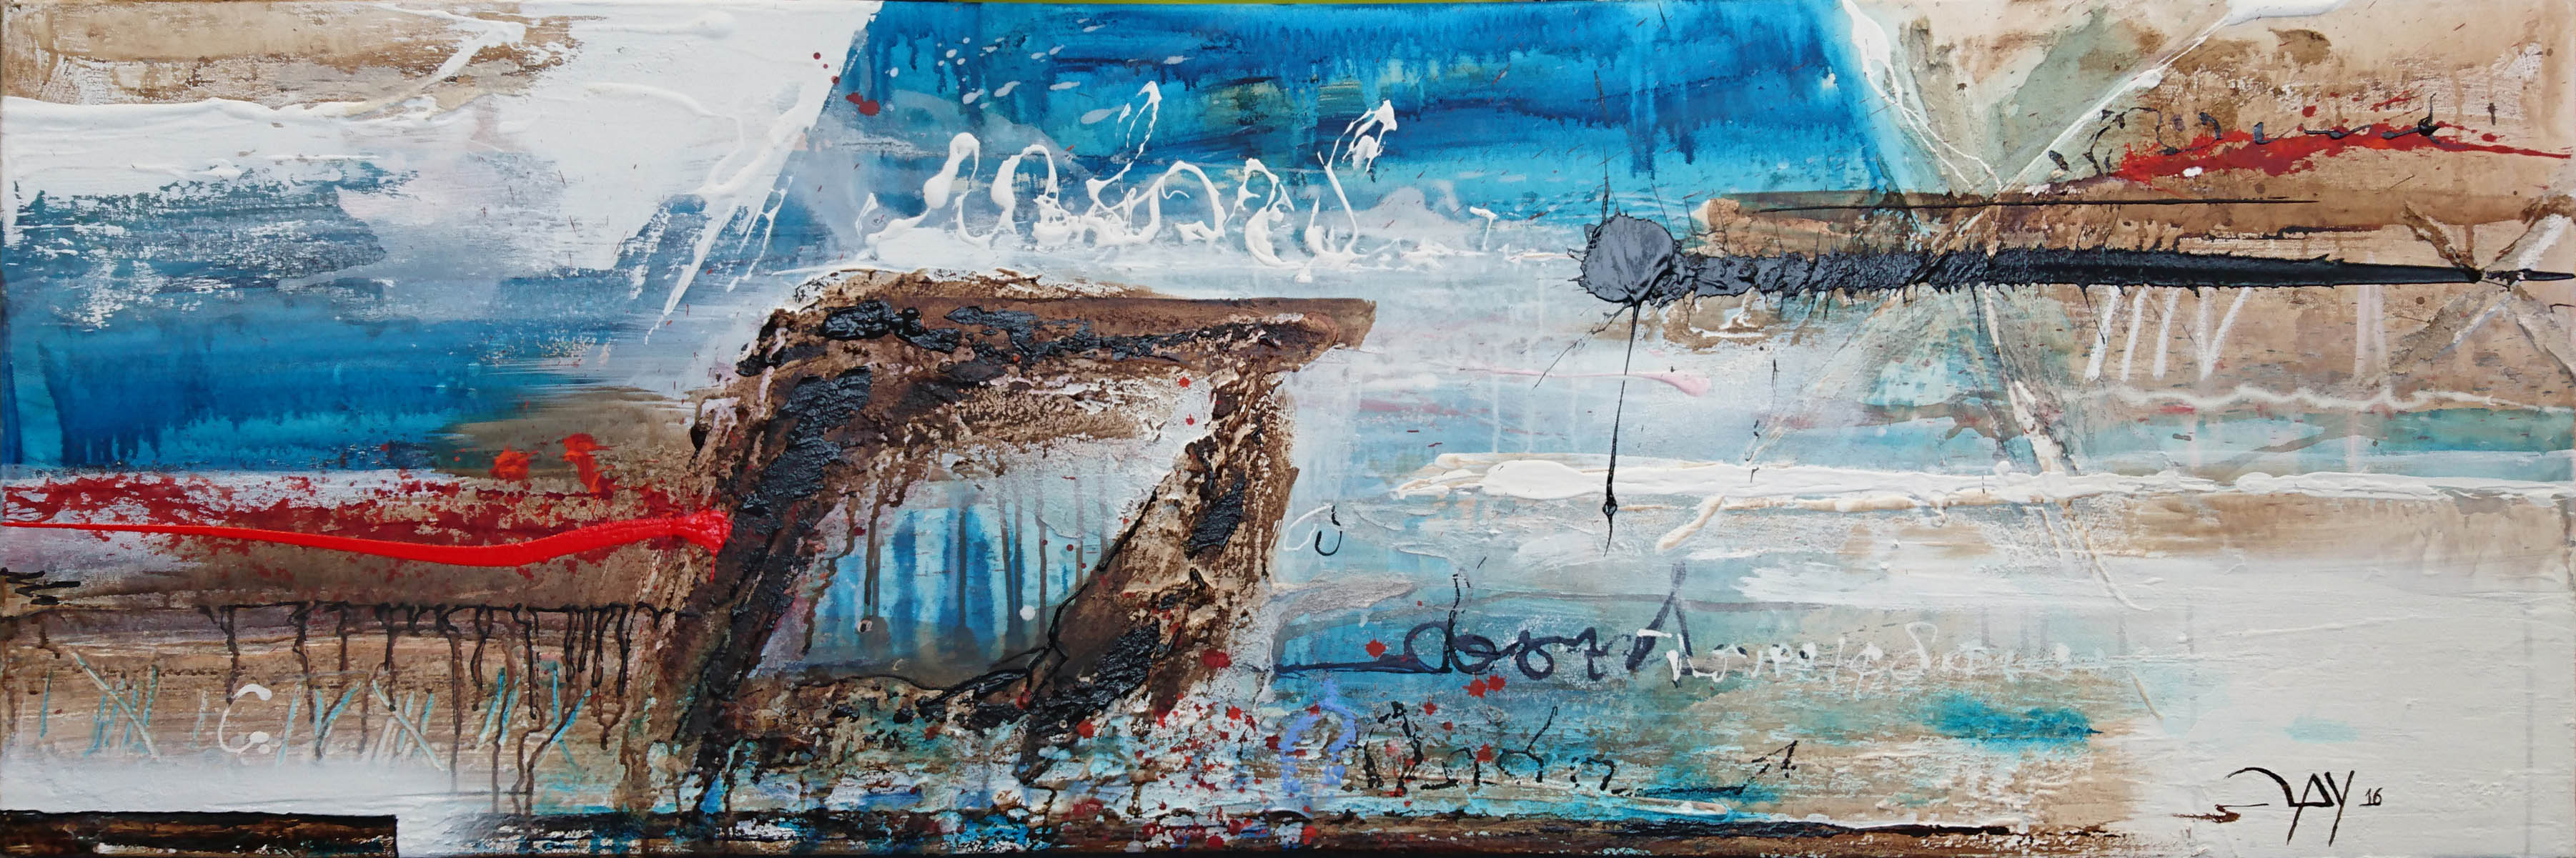 Acrylbild "blue lagoon" 150 x 50 cm in weissem Holzrahmen